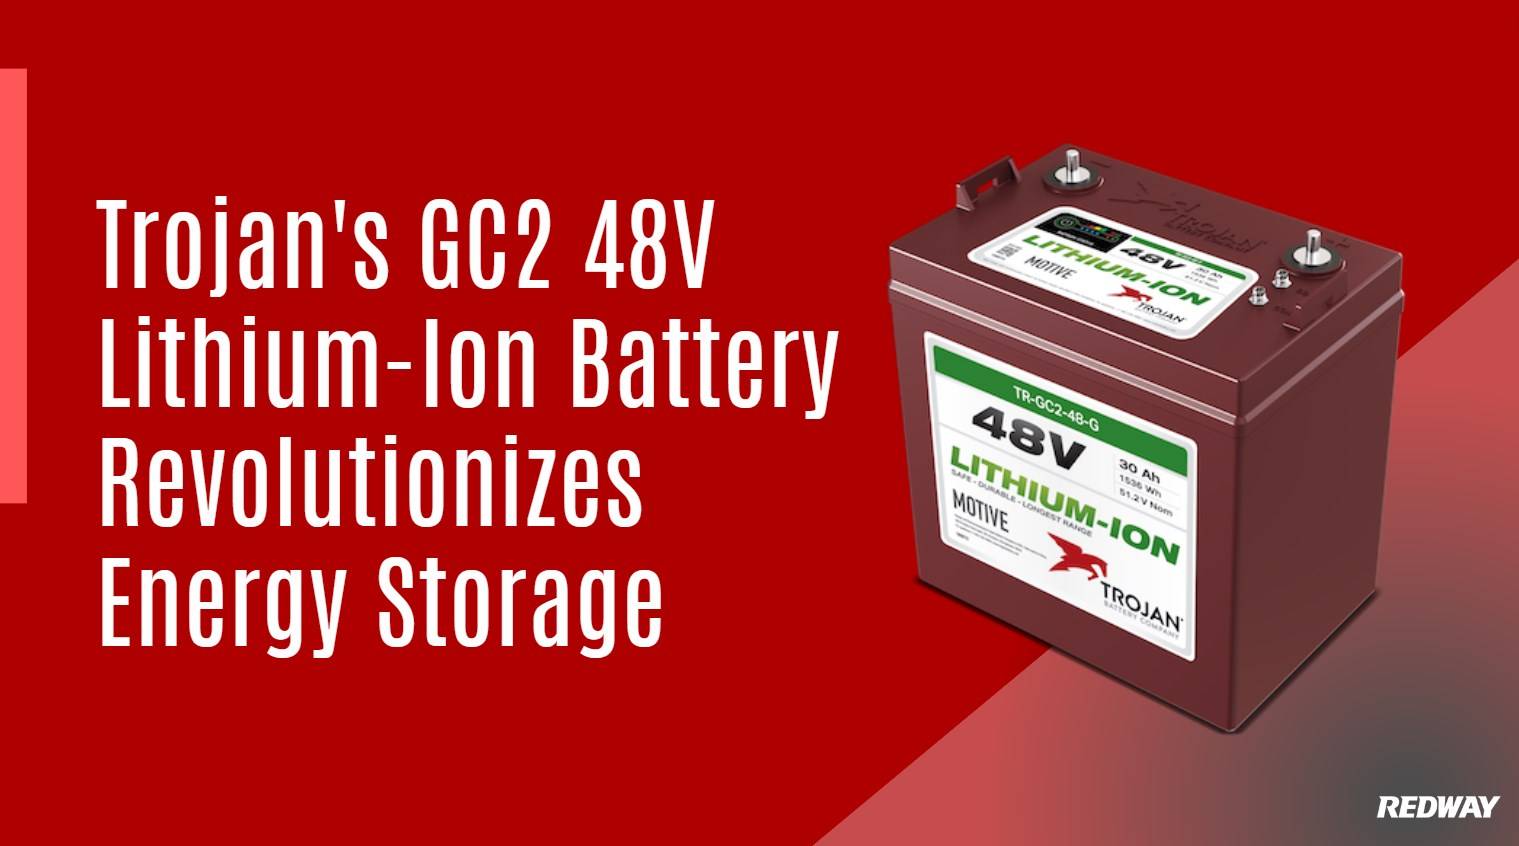 Trojan's GC2 48V Lithium-Ion Battery Revolutionizes Energy Storage